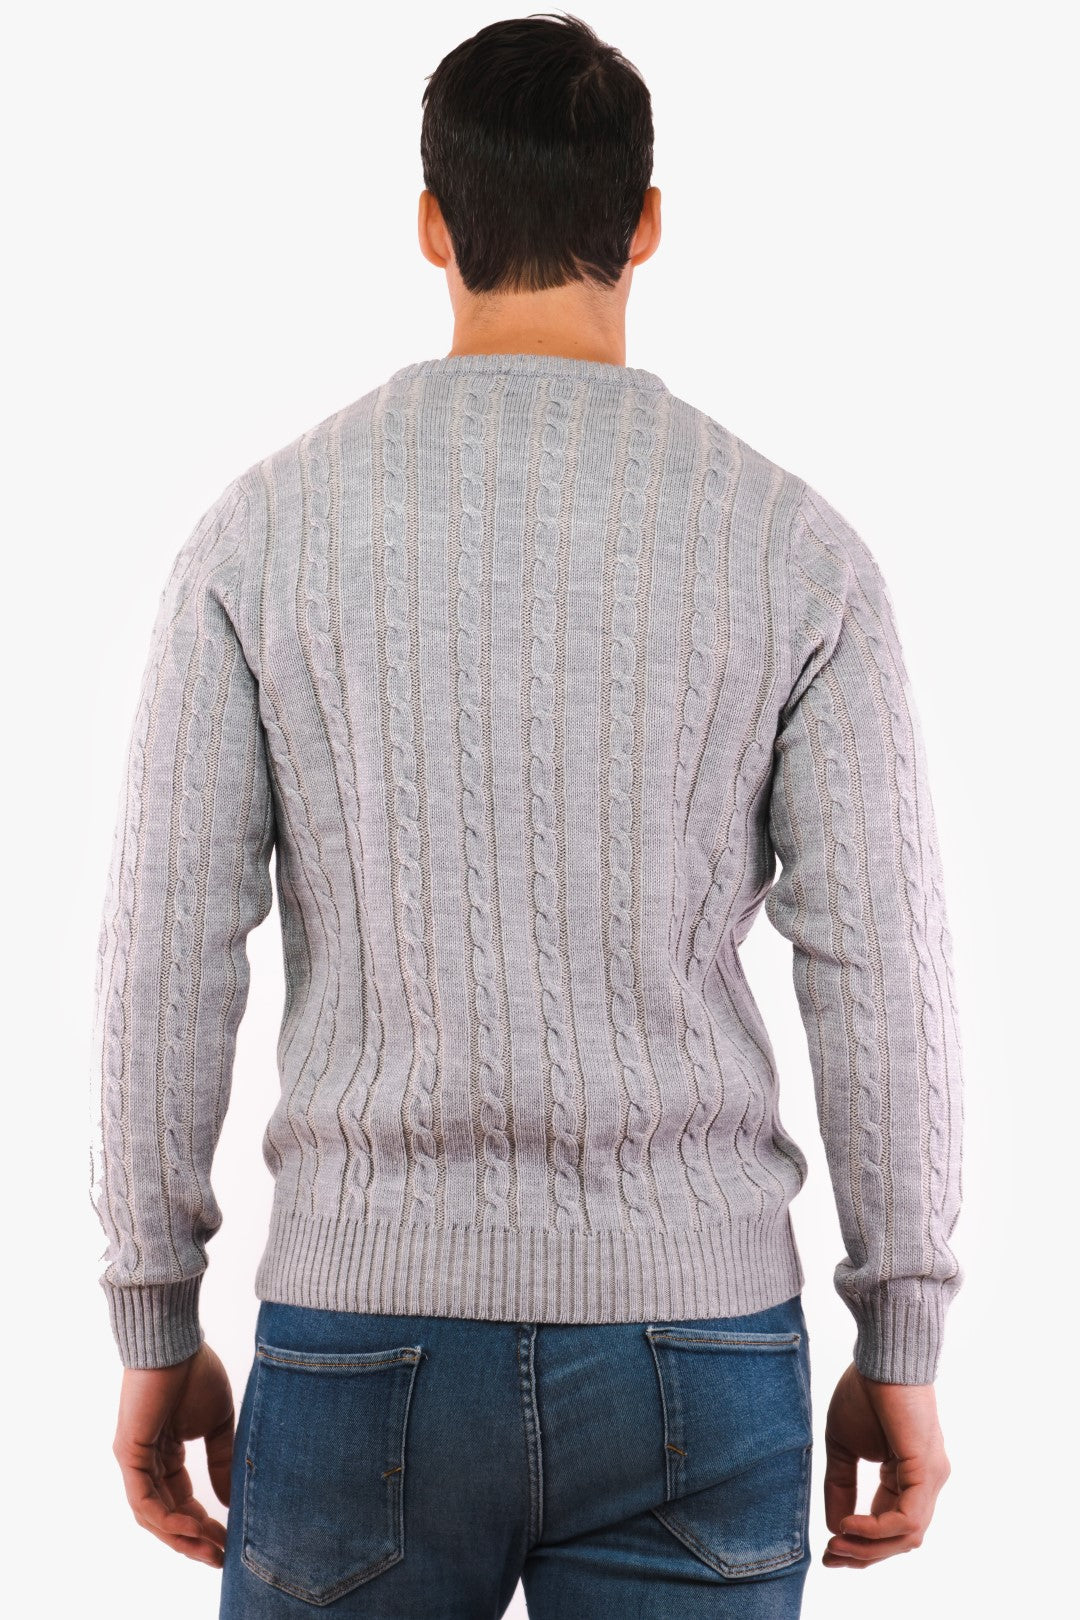 Gray Hörst sweater